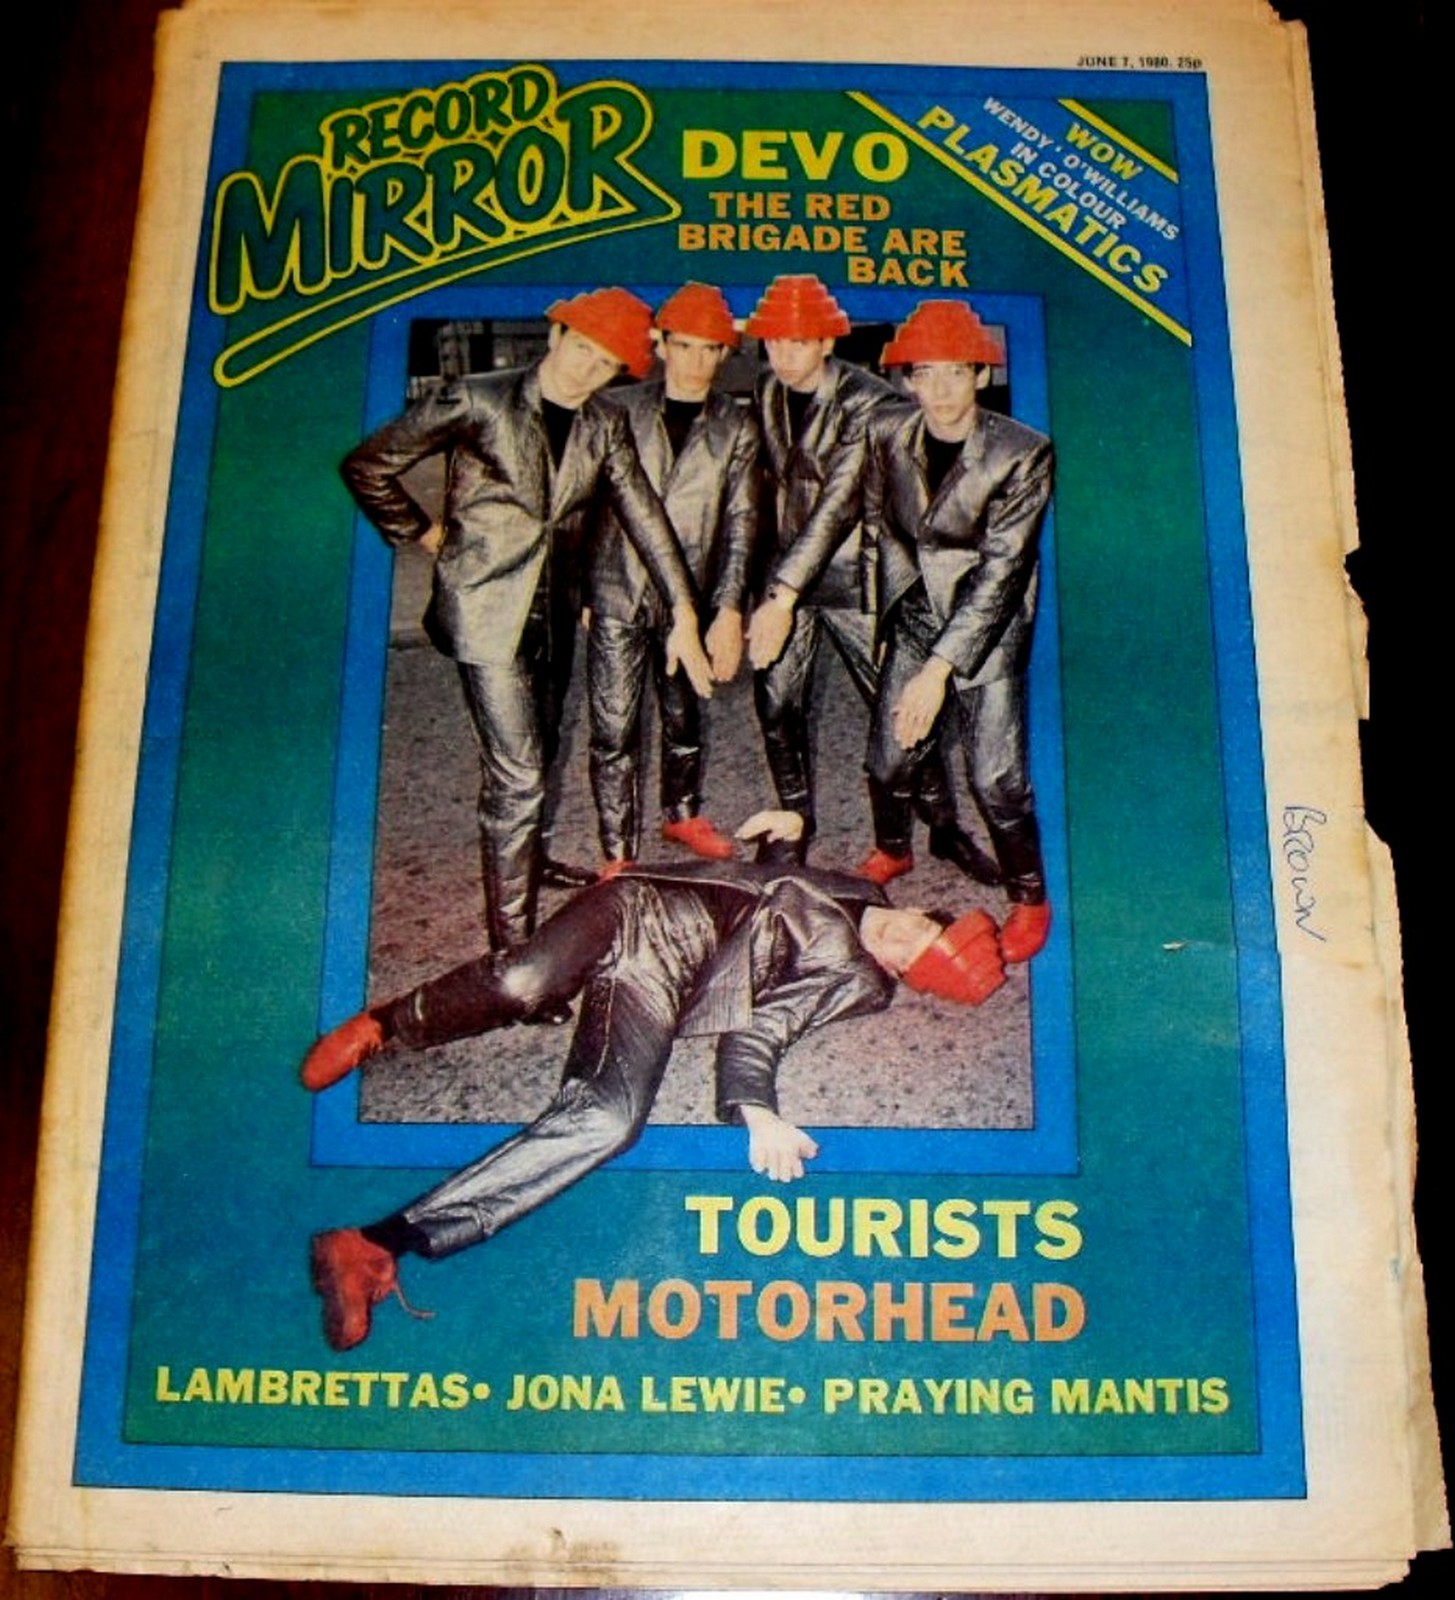 1980 June 7 edition of Record Mirror, Devo - The Red Brigade are back - Tourists, Motorhead, Praying